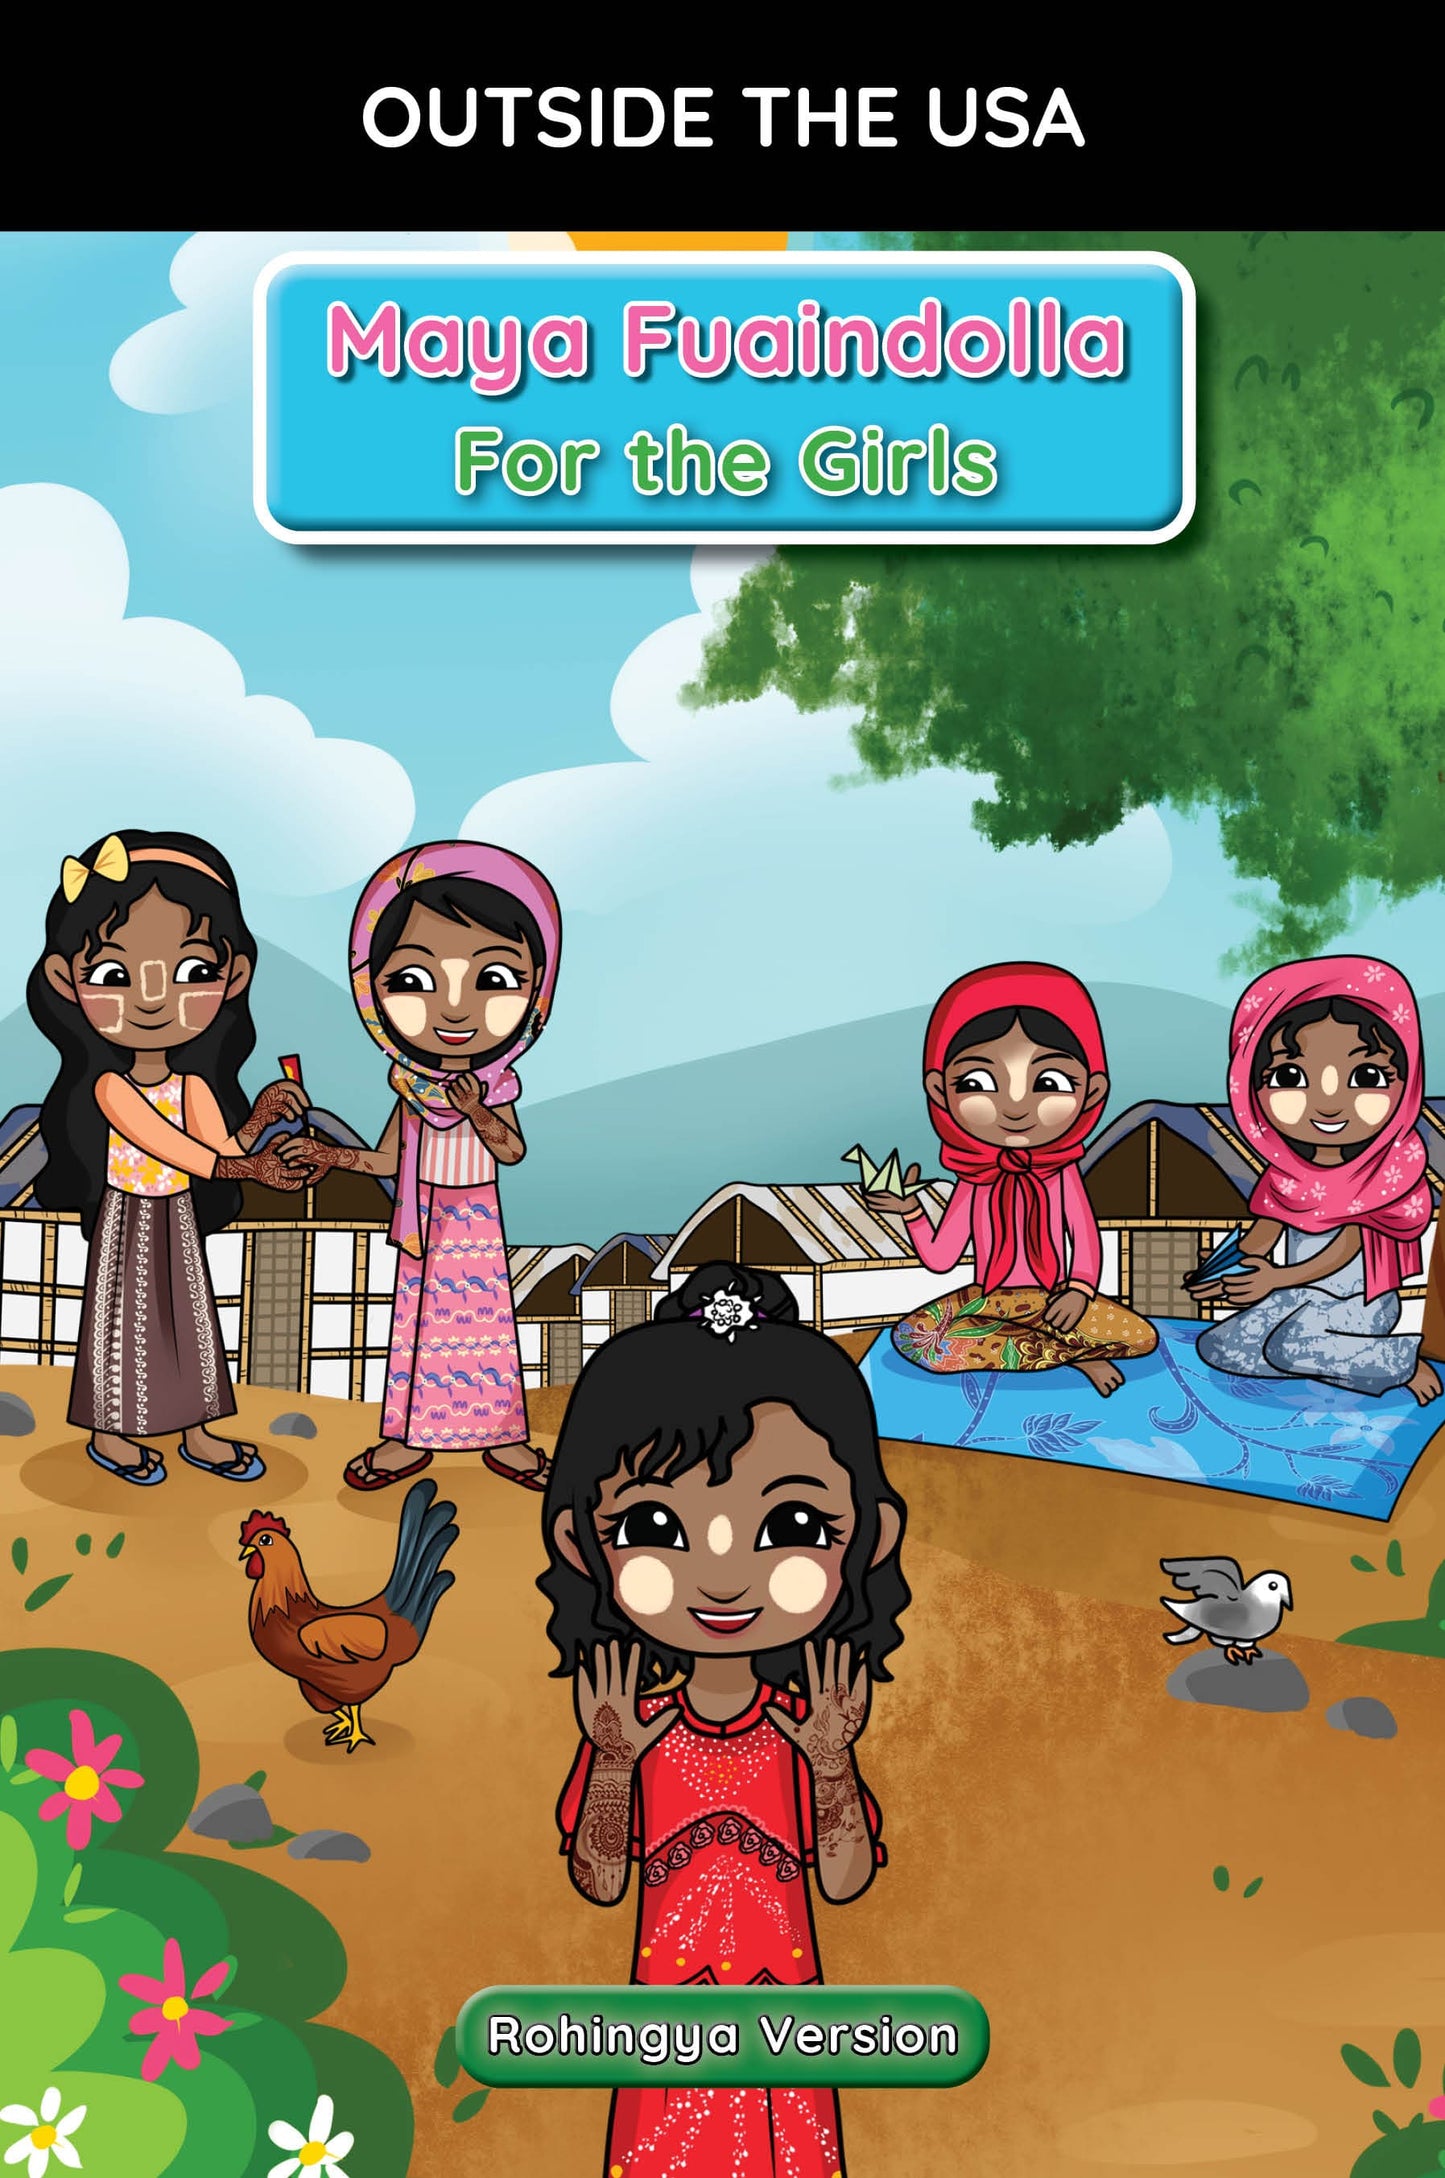 For the Girls: Rohingya Version